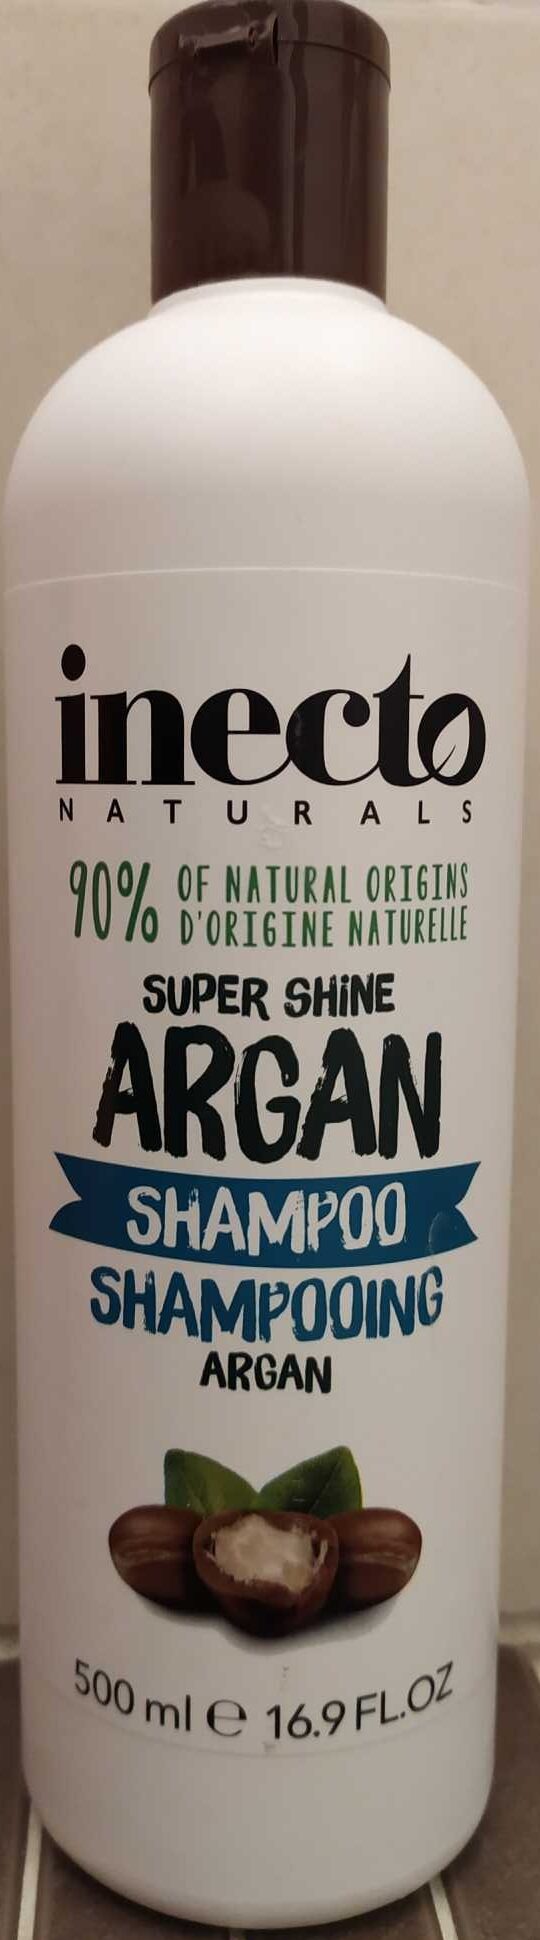 Shampoing ARGAN - 製品 - fr